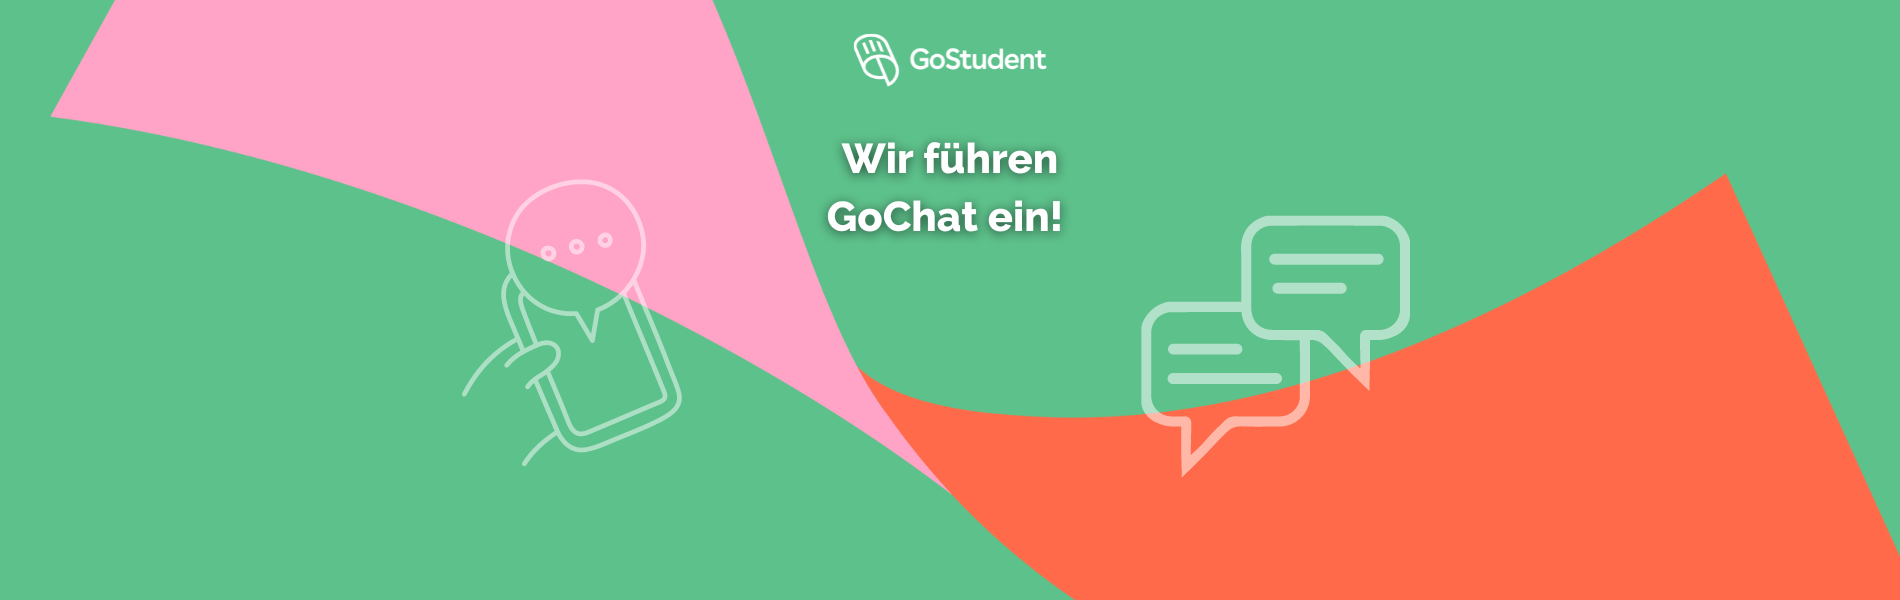 Eure Schüler*innen-Kommunikation läuft bald über GoChat